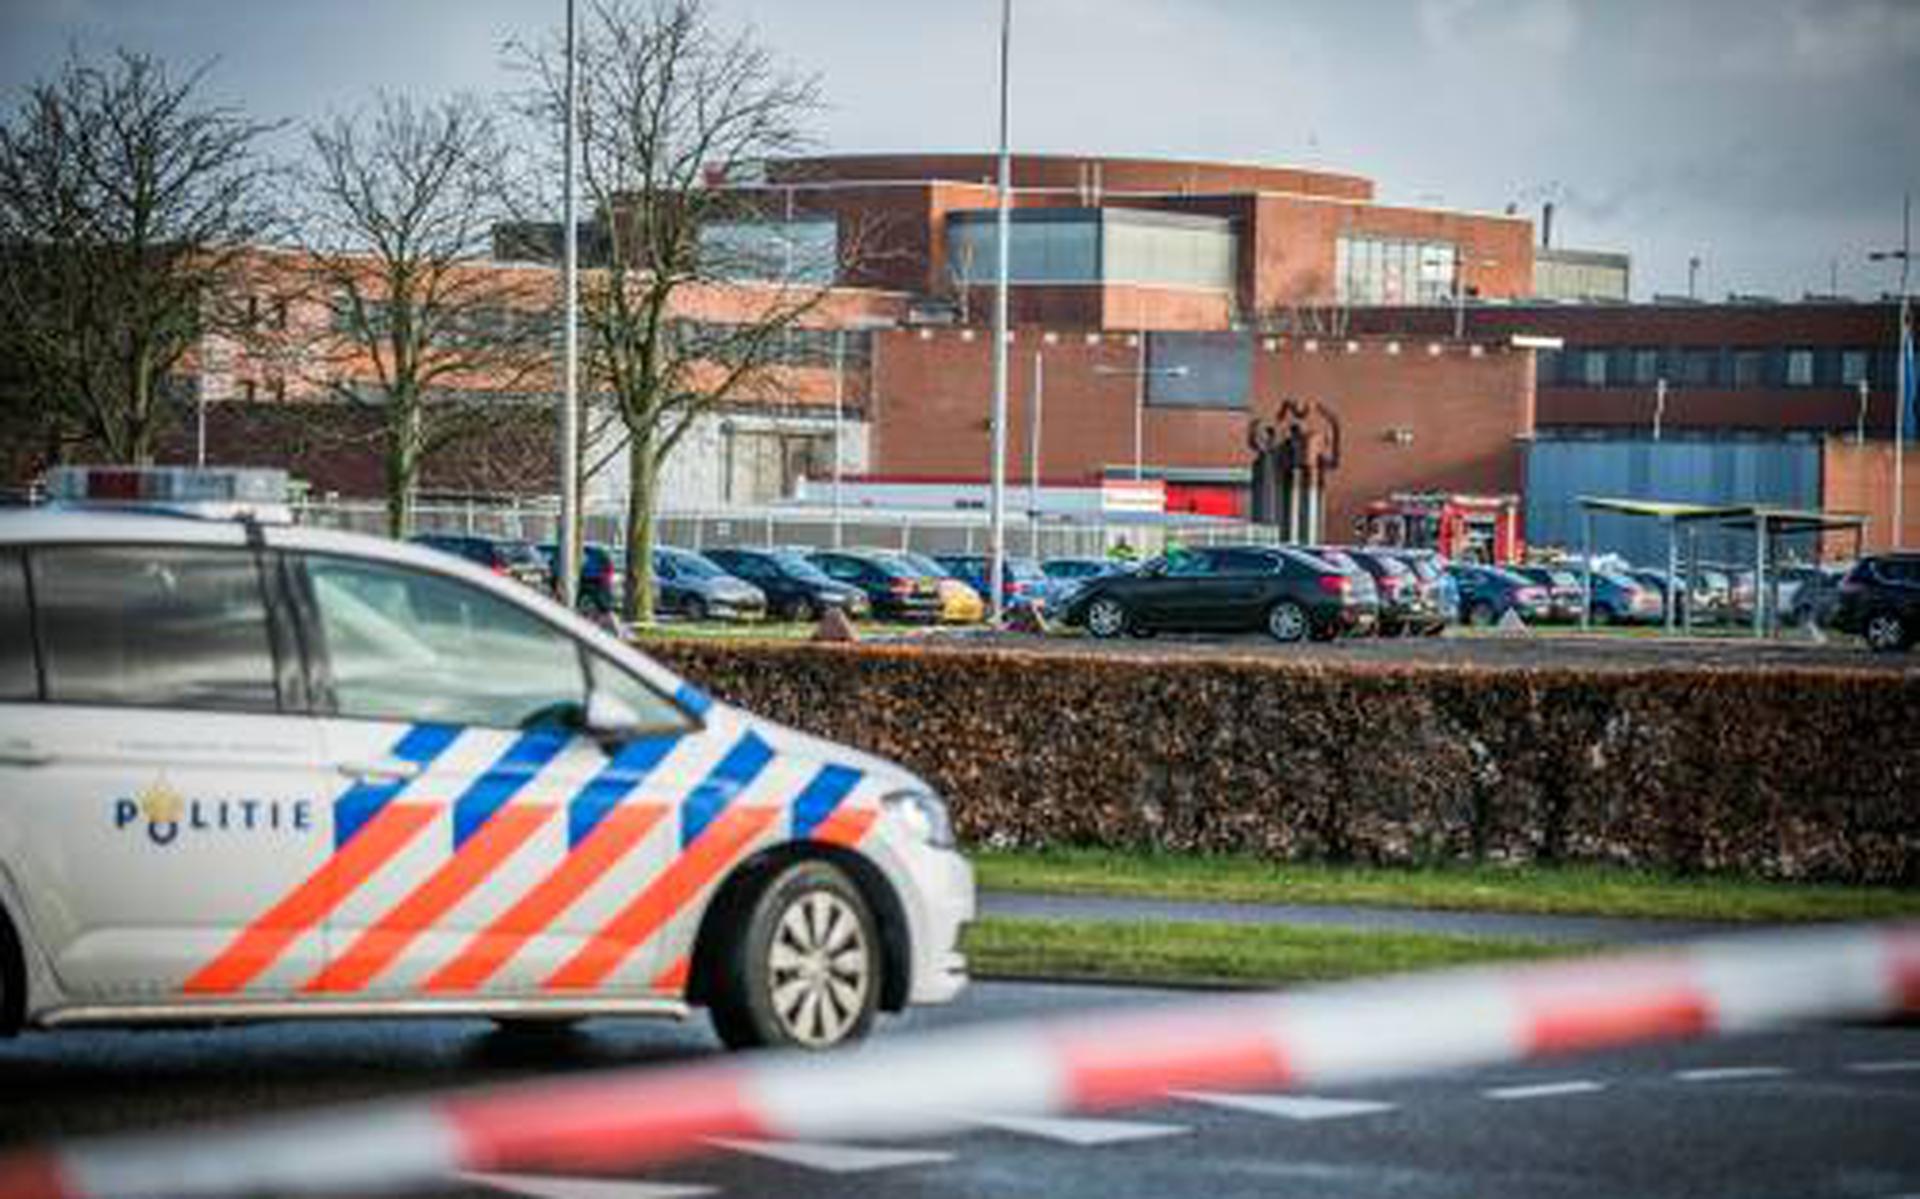 Incident gevangenis Zutphen was ontsnappingspoging